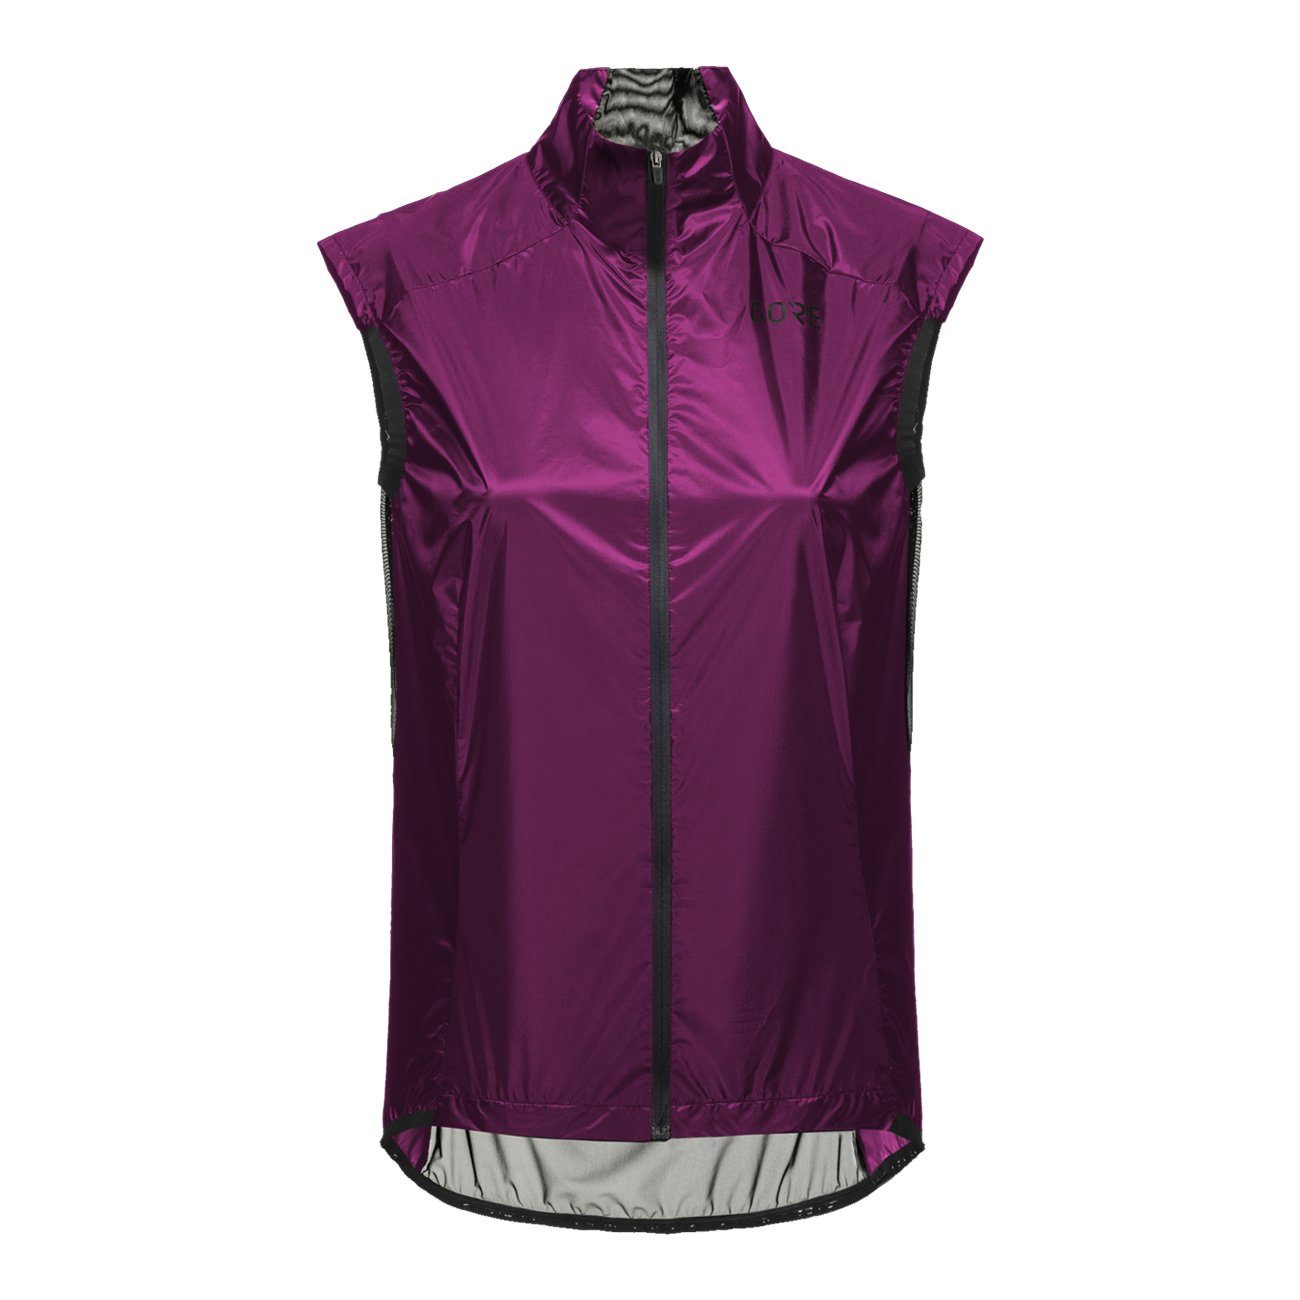 GORE® Wear Gore Wear Ambient Vest Damen Process Purple Black Outdoorschuh BQ99 process purple/black